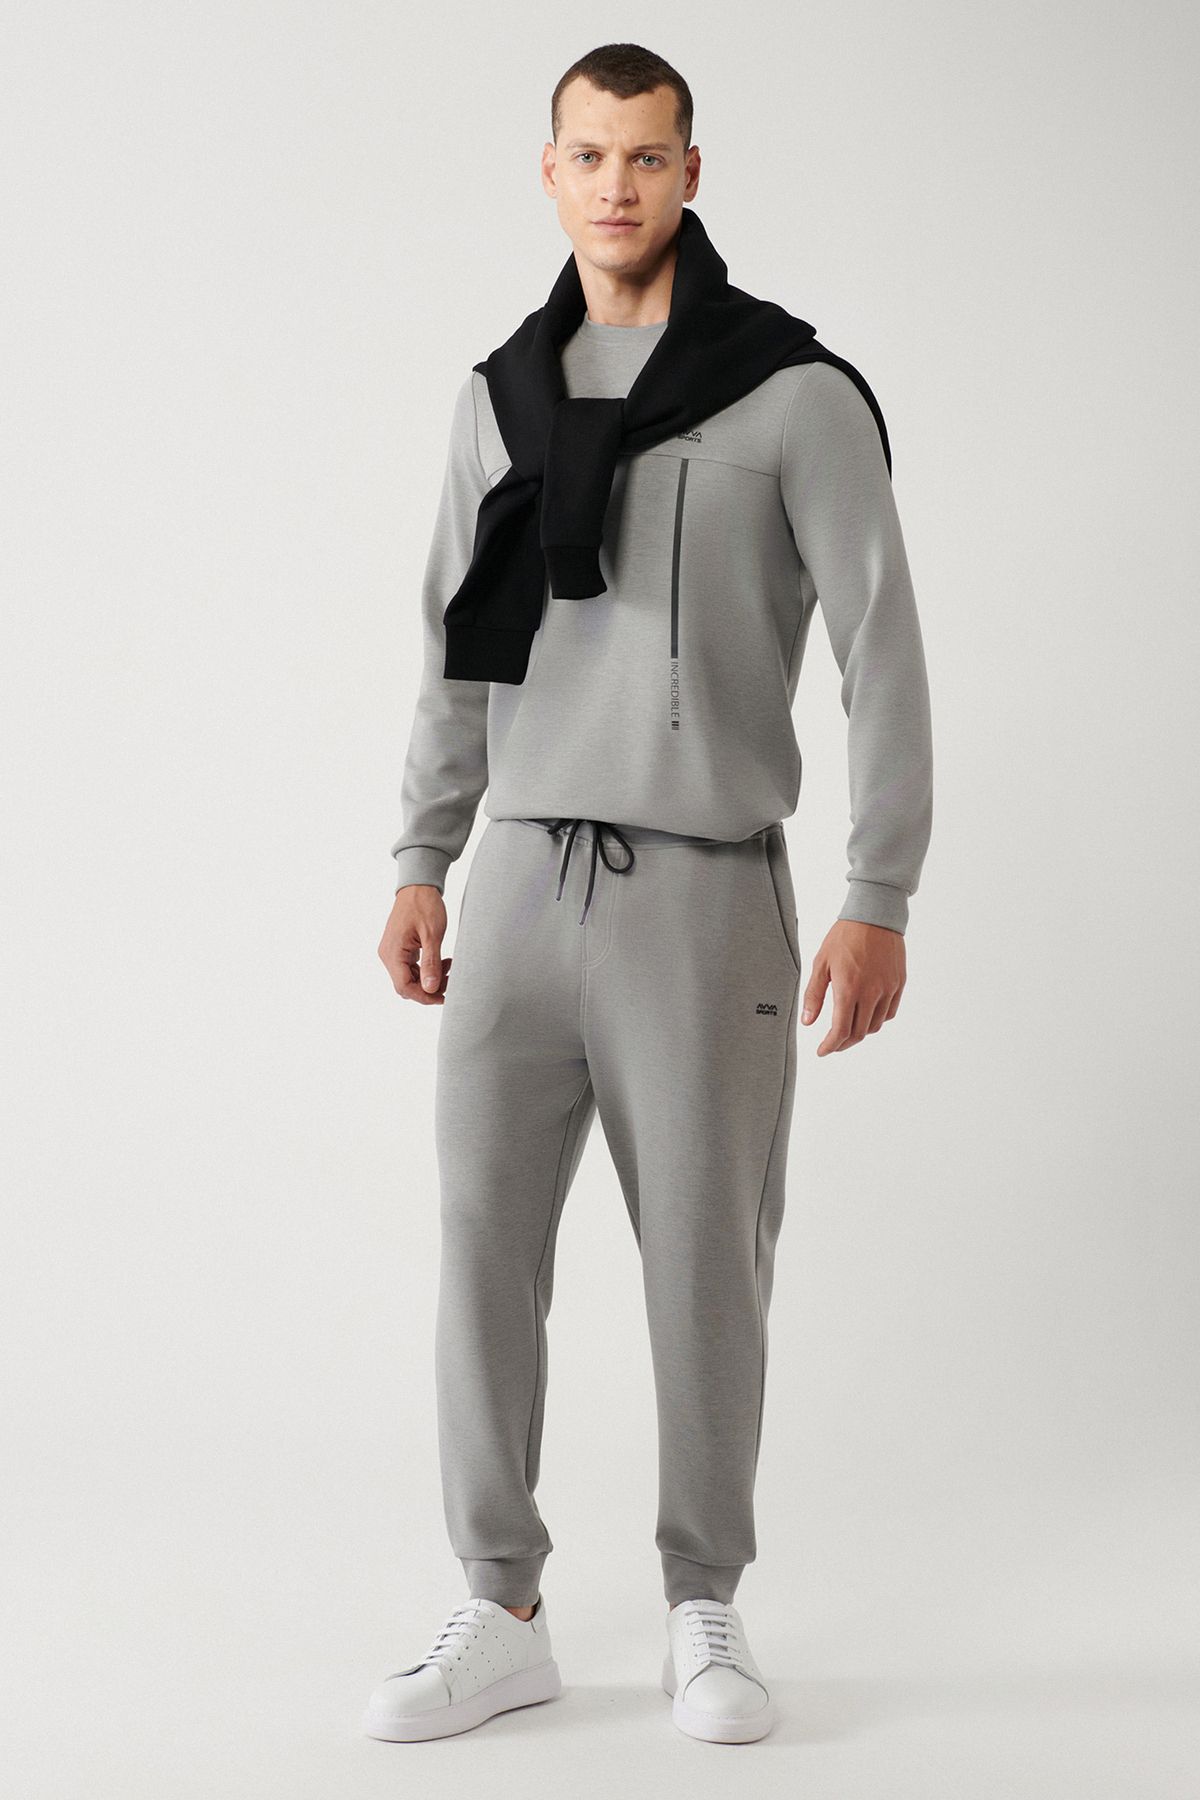 Avva لباس های جگر خاکستری مردانه شش کمر لمسی نرم و باریک پوشیده شده تناسب منظم A32Y3431